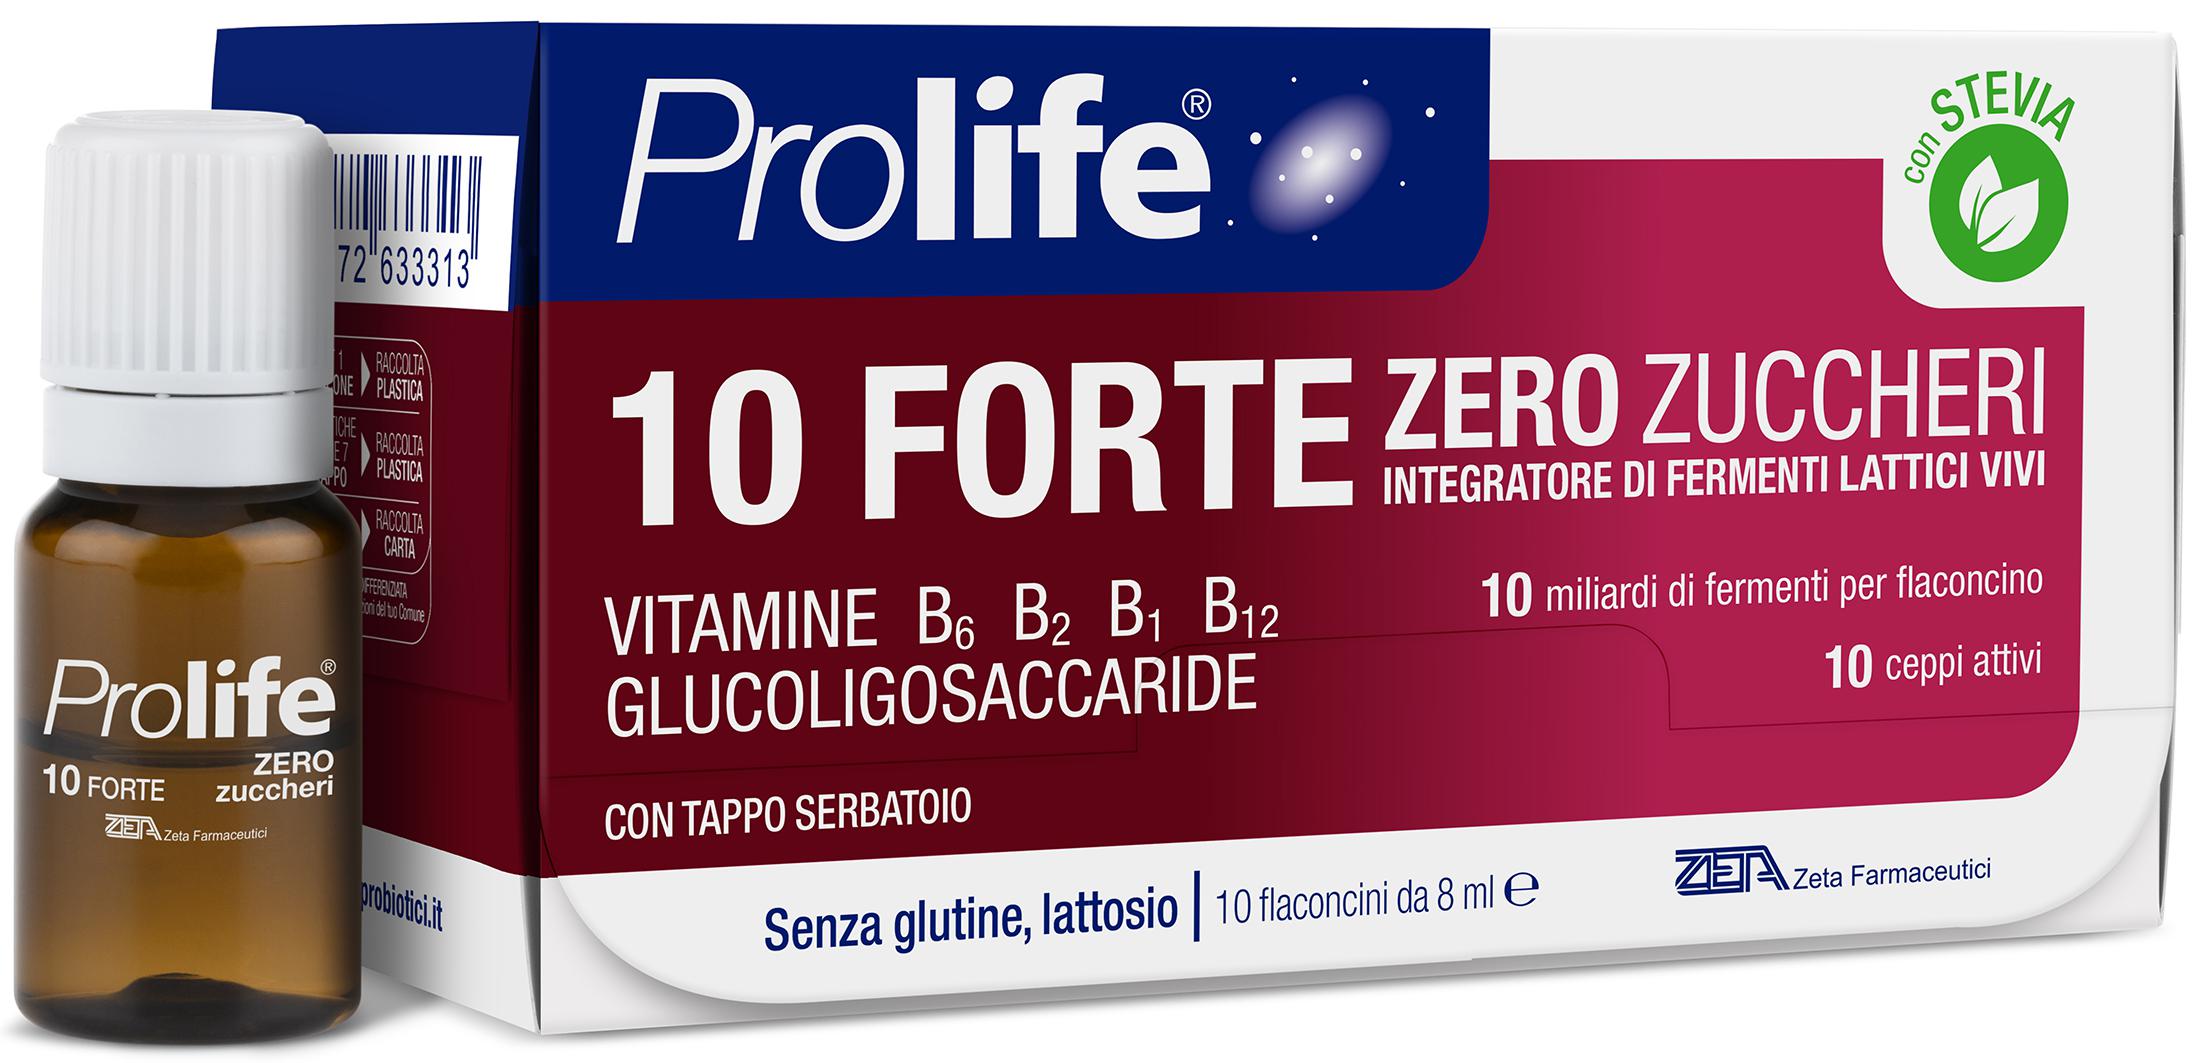 ProLife 10 Forte zero zuccheri